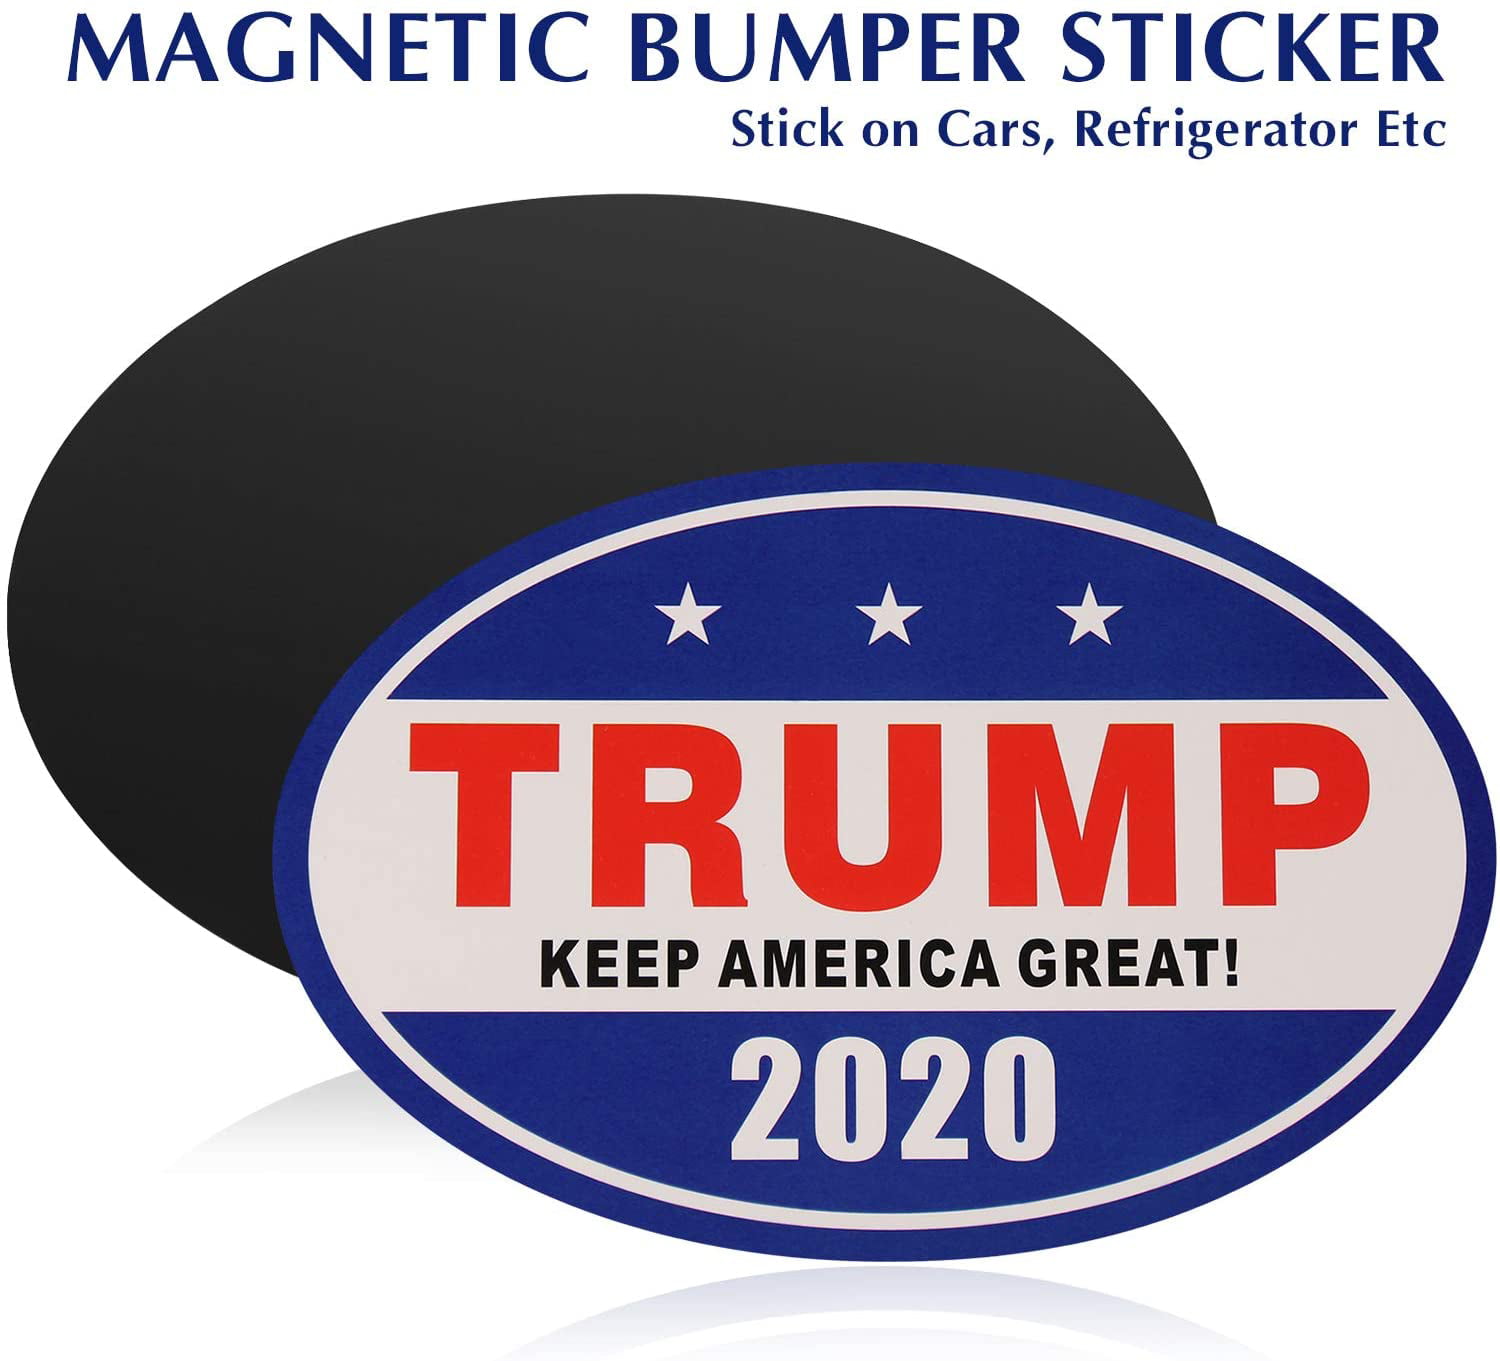 4 2020 Trump Car Decal Keep America Great Elect President Donald Trump 2020 Election Patriotic Bumper Motorcycle Decor Waterproof Sticker 